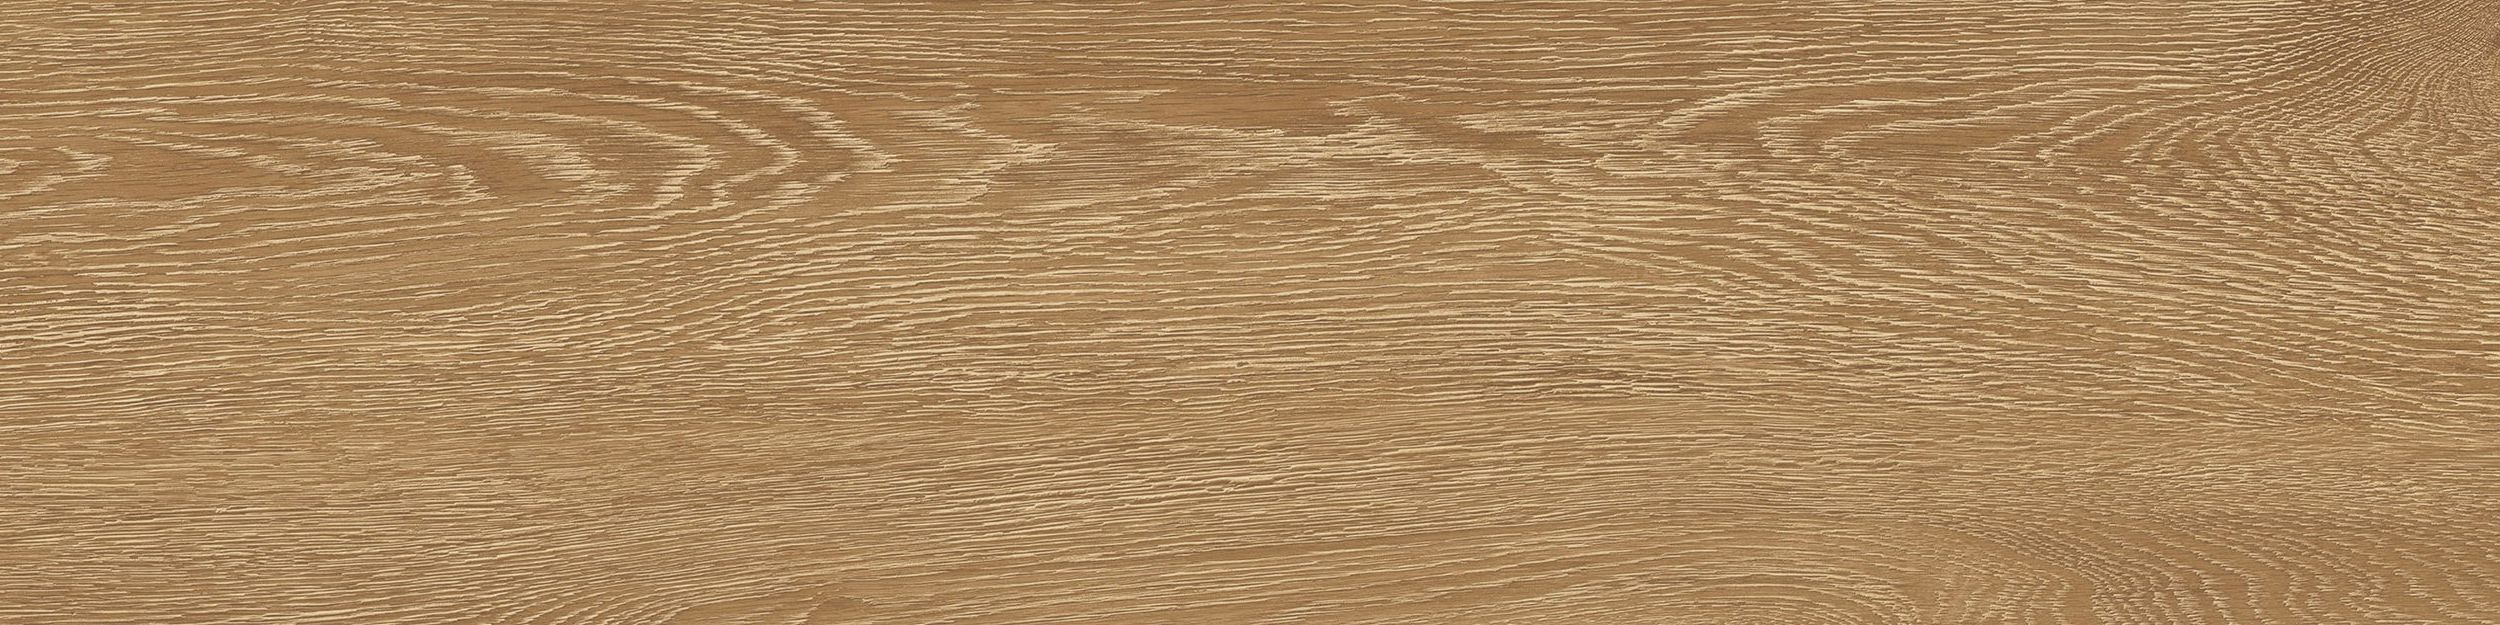 Textured Woodgrains LVT In Antique Oak afbeeldingnummer 3